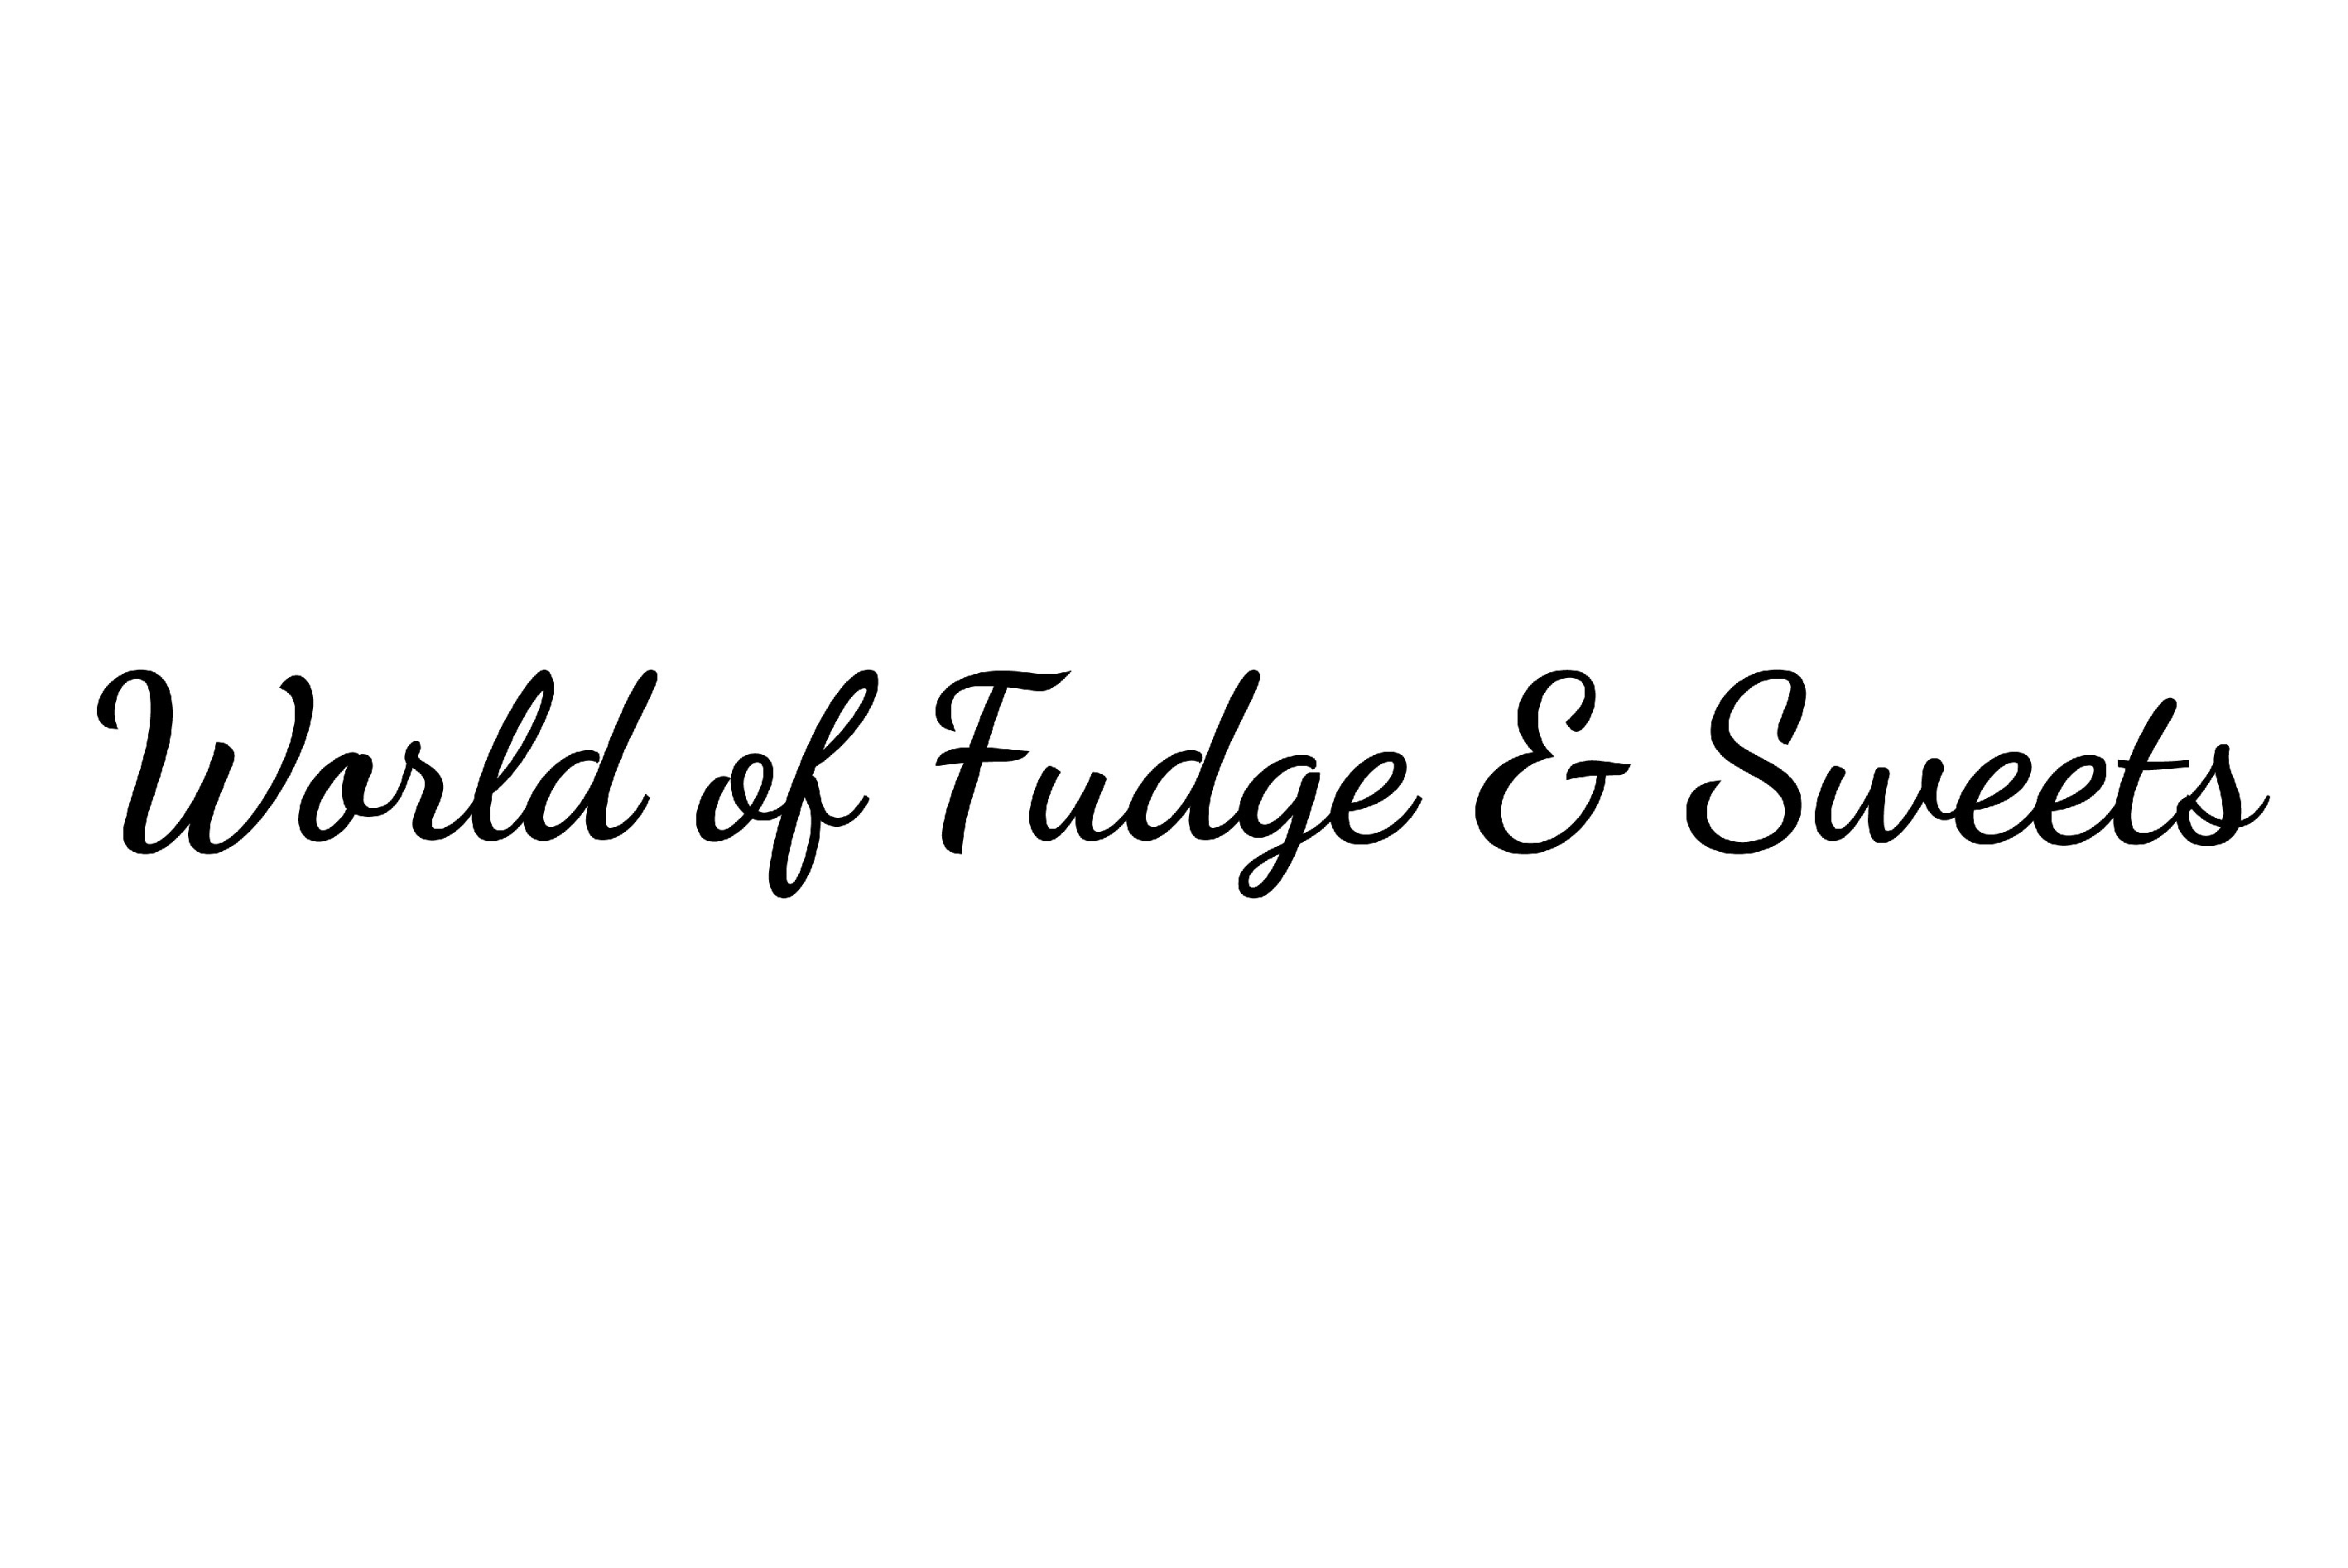 World of Fudge & Sweets